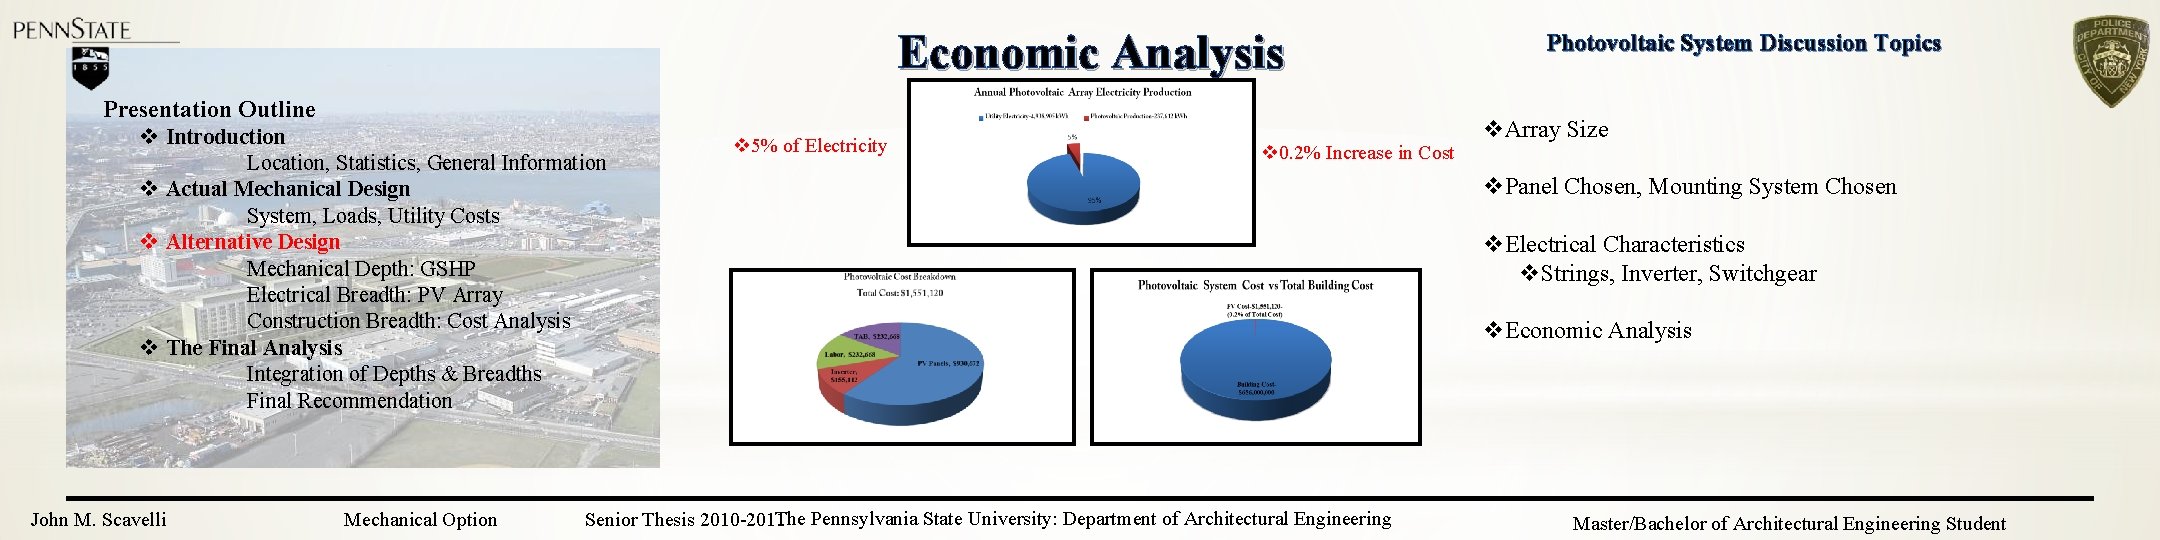 Economic Analysis Presentation Outline v Introduction Location, Statistics, General Information v Actual Mechanical Design